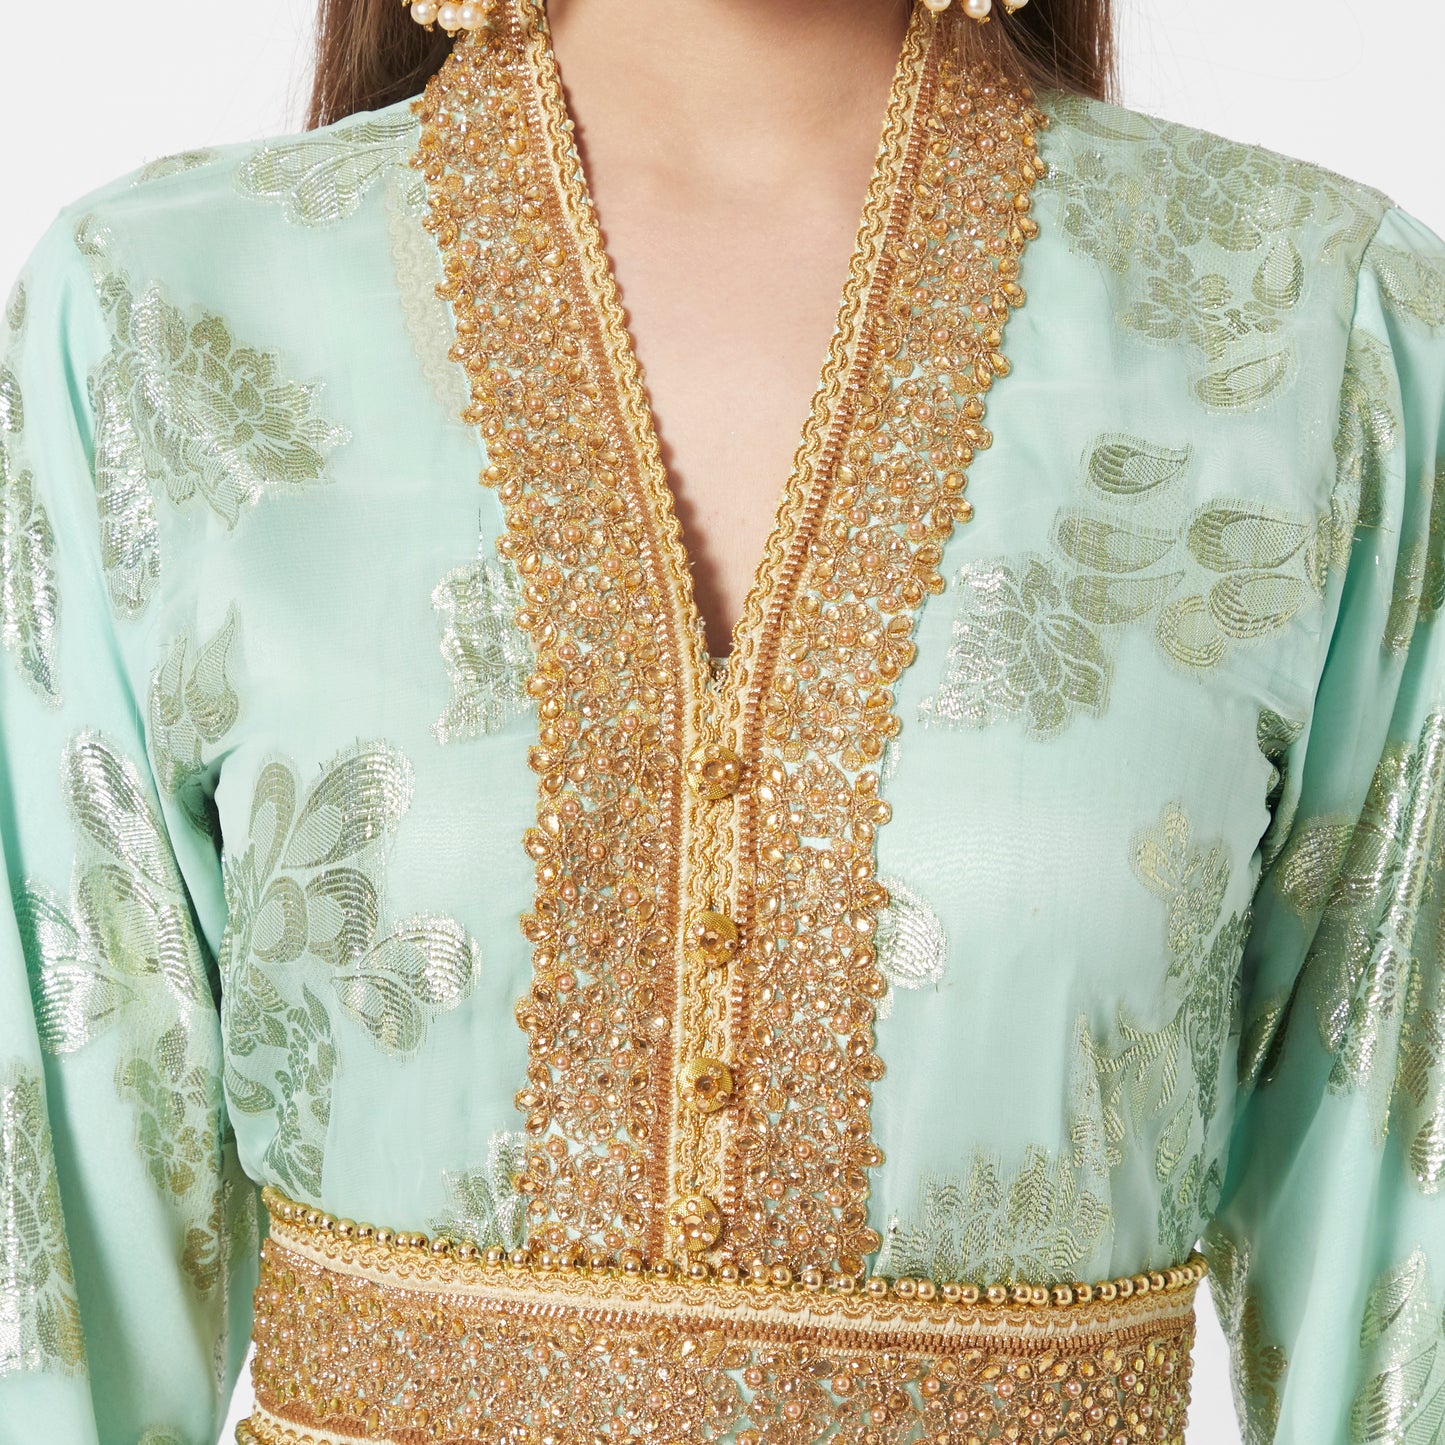 Designer Jellebiya Arabian Party Dress Khaleeji Thobe in Brasso Fabric - Maxim Creation